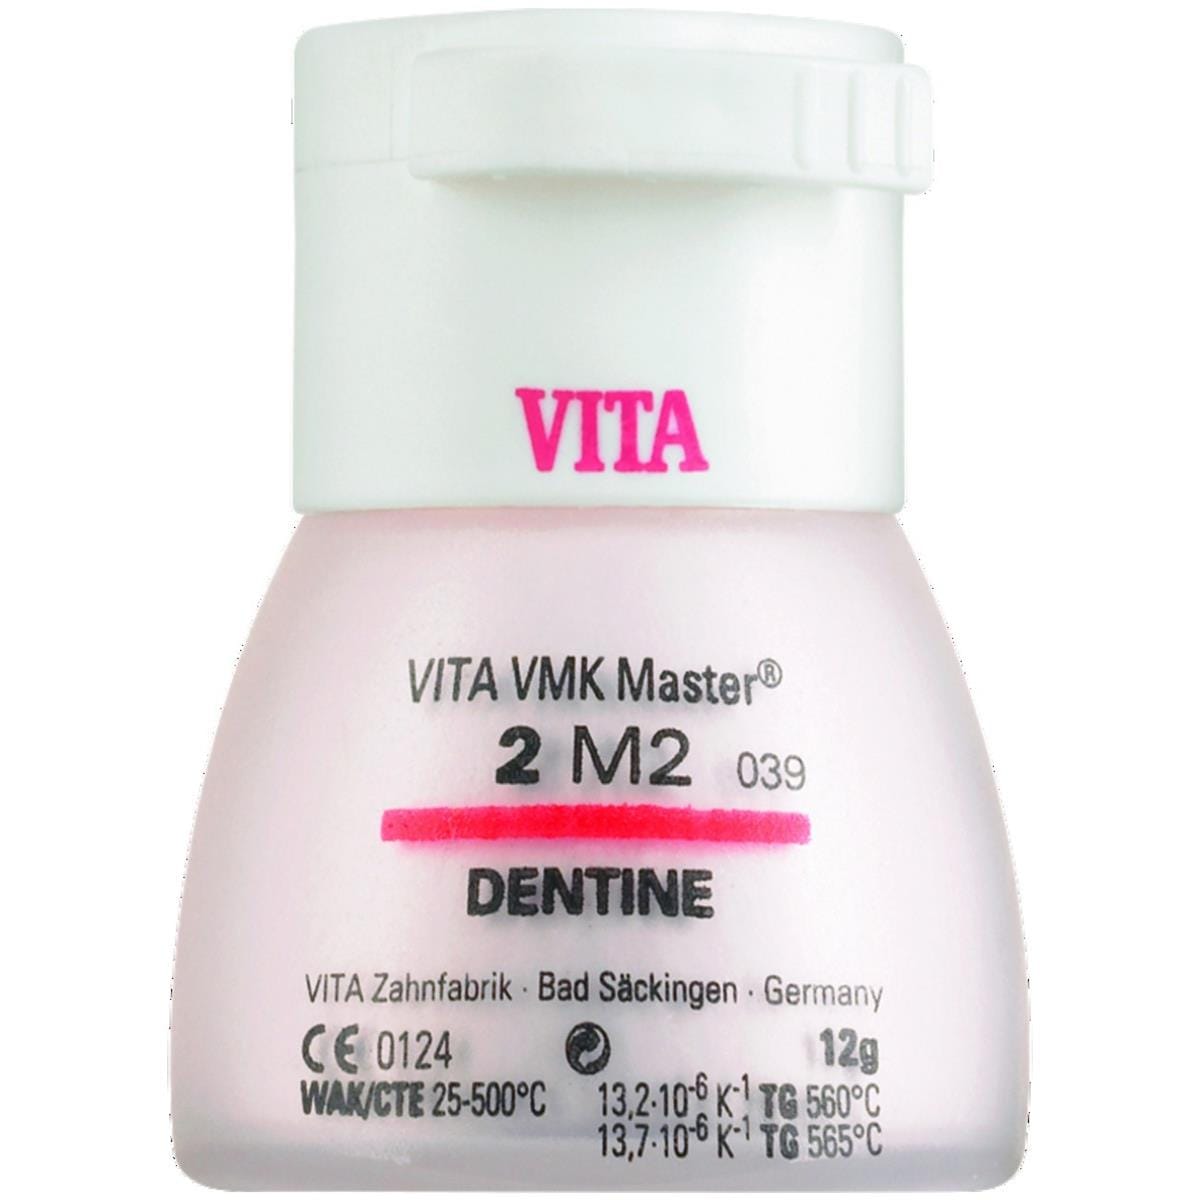 VMK Master VITA - Dentine - 2L1,5 - Le flacon de 12 g